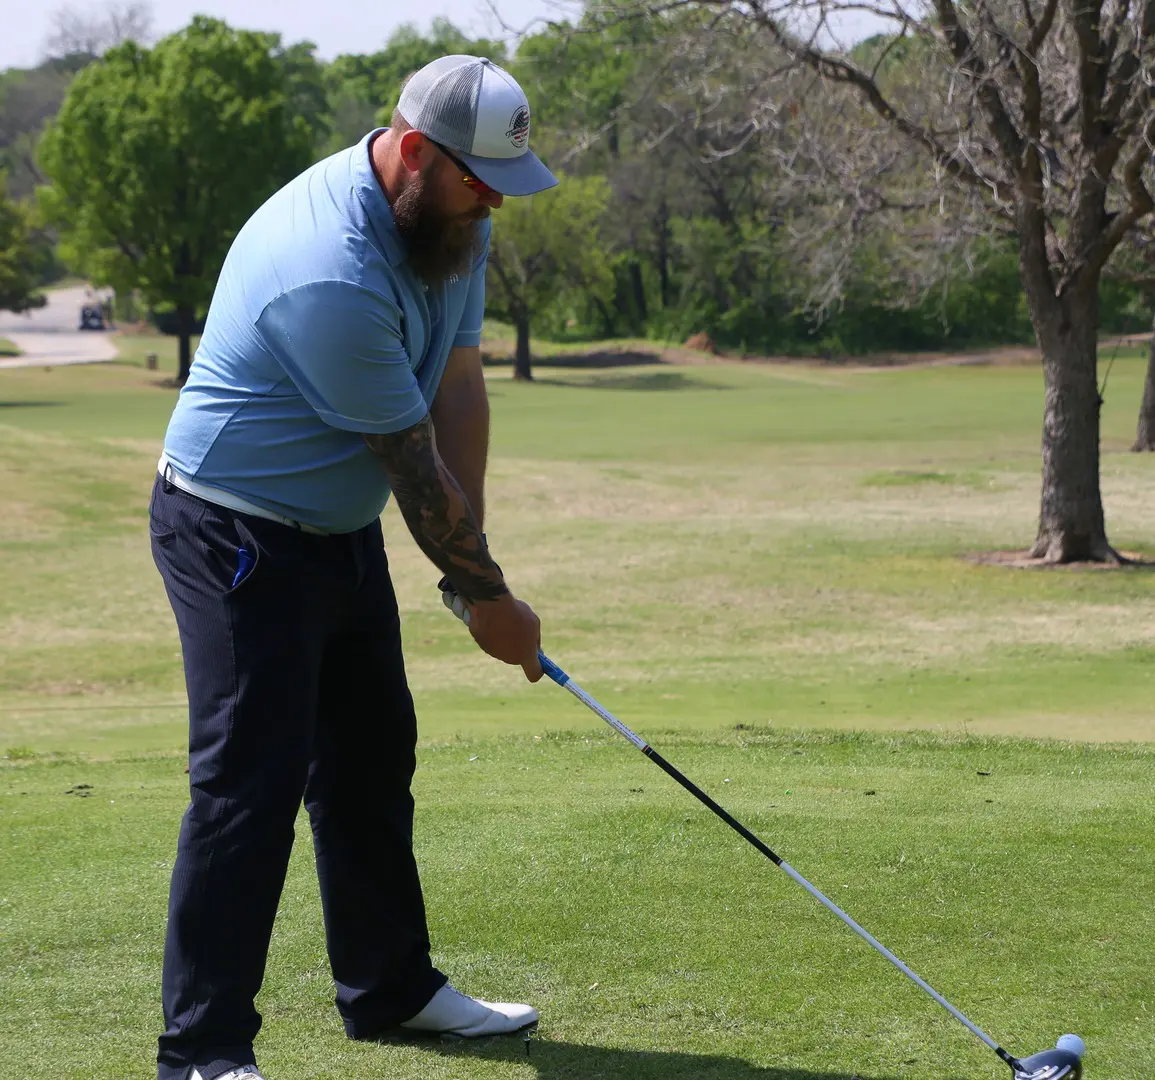 A bearded man swinging a golf club on a golf course.